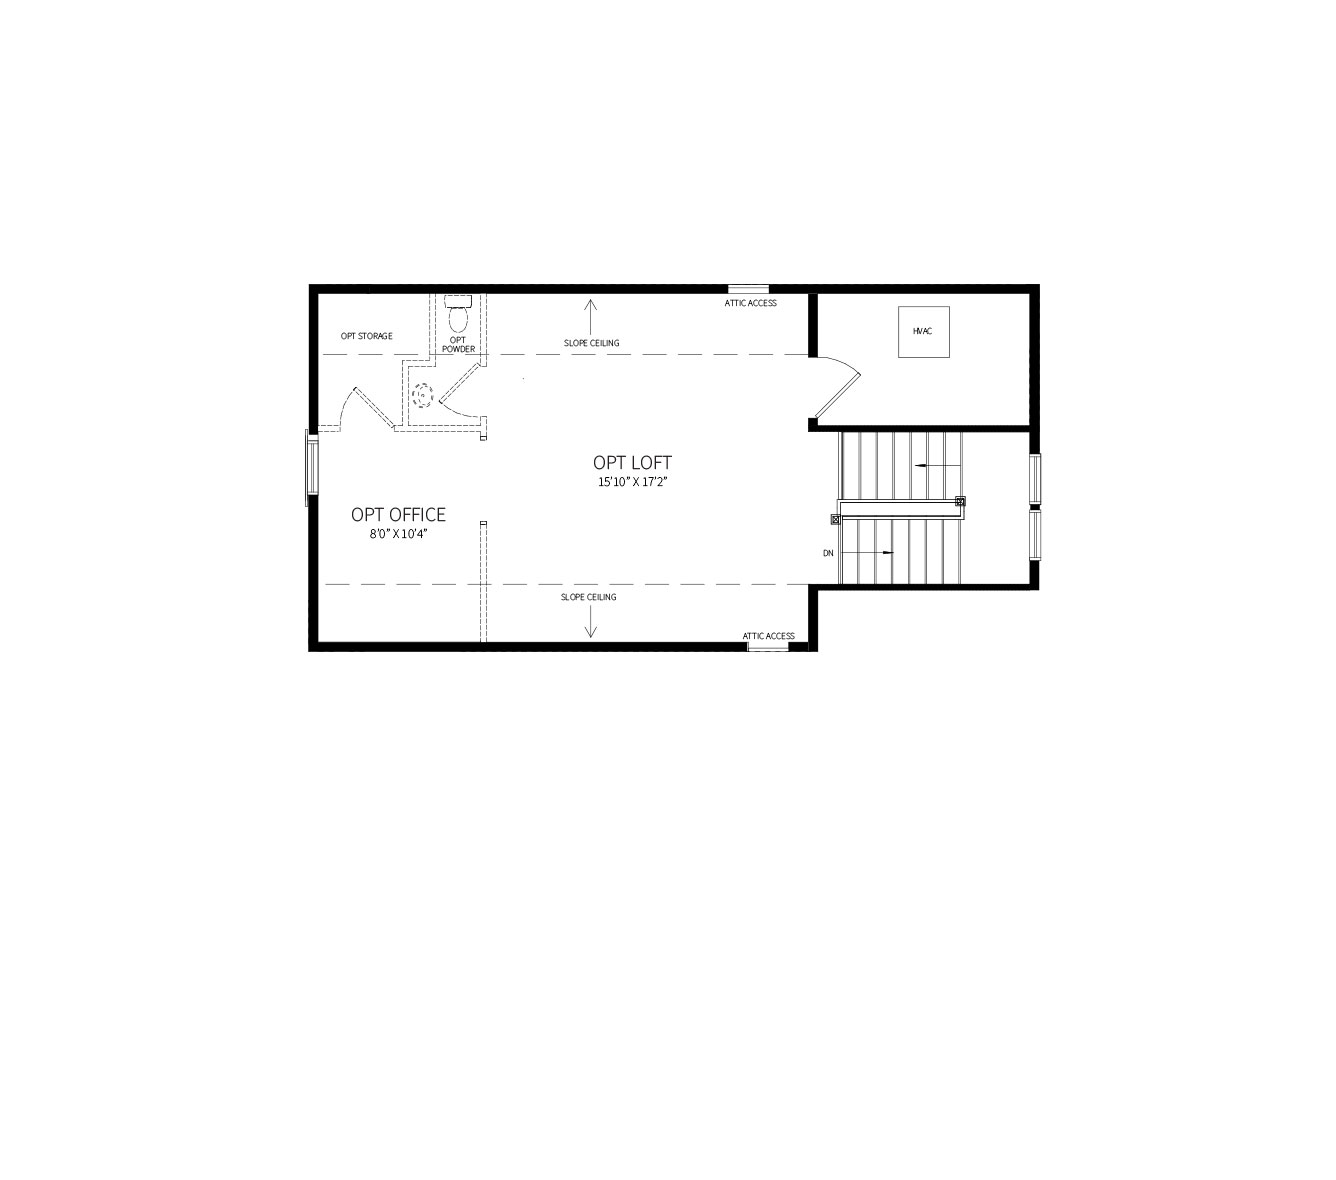 A floor plan of an optional attic loft/media room space.